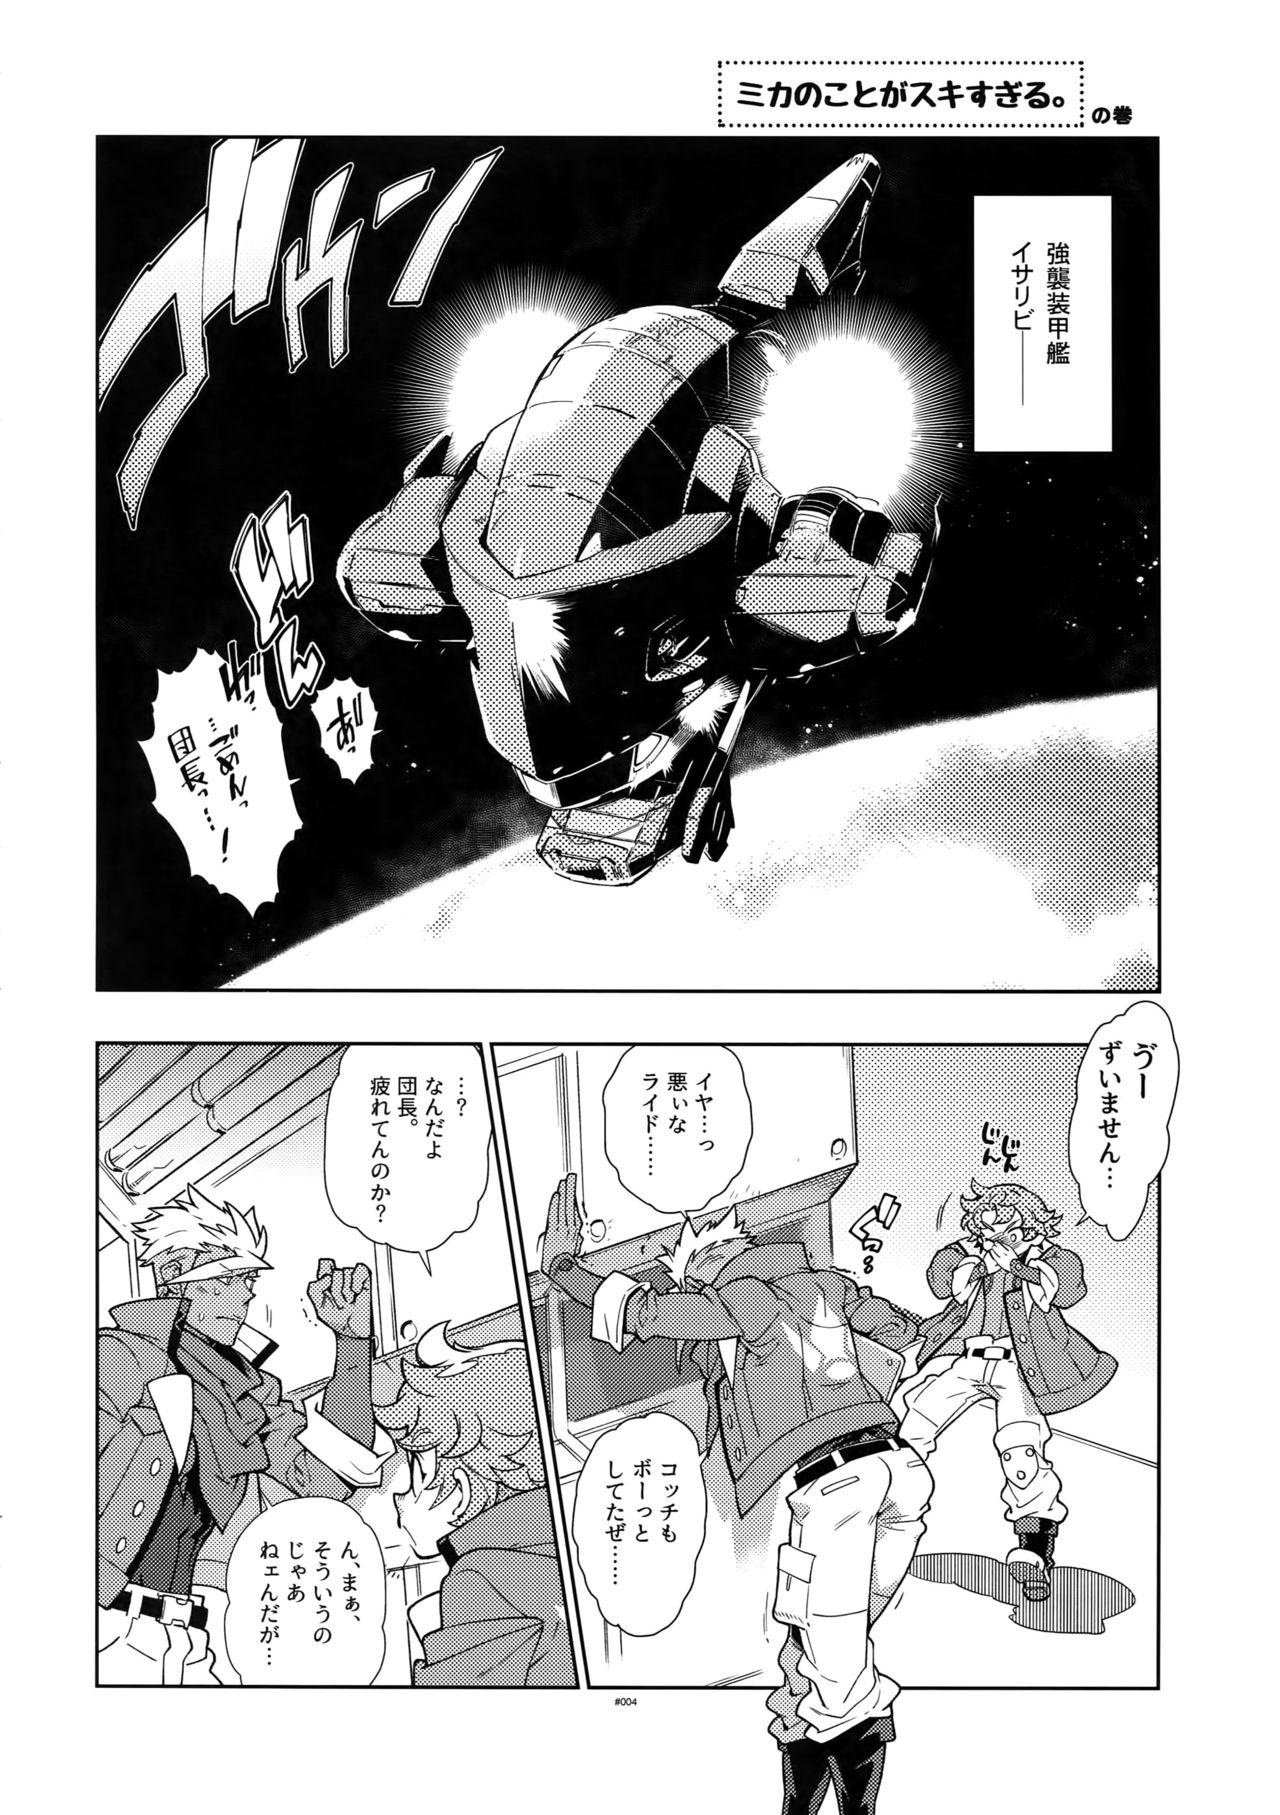 Tit Mika no Koto ga Suki Sugiru. - Mobile suit gundam tekketsu no orphans Hairypussy - Page 3